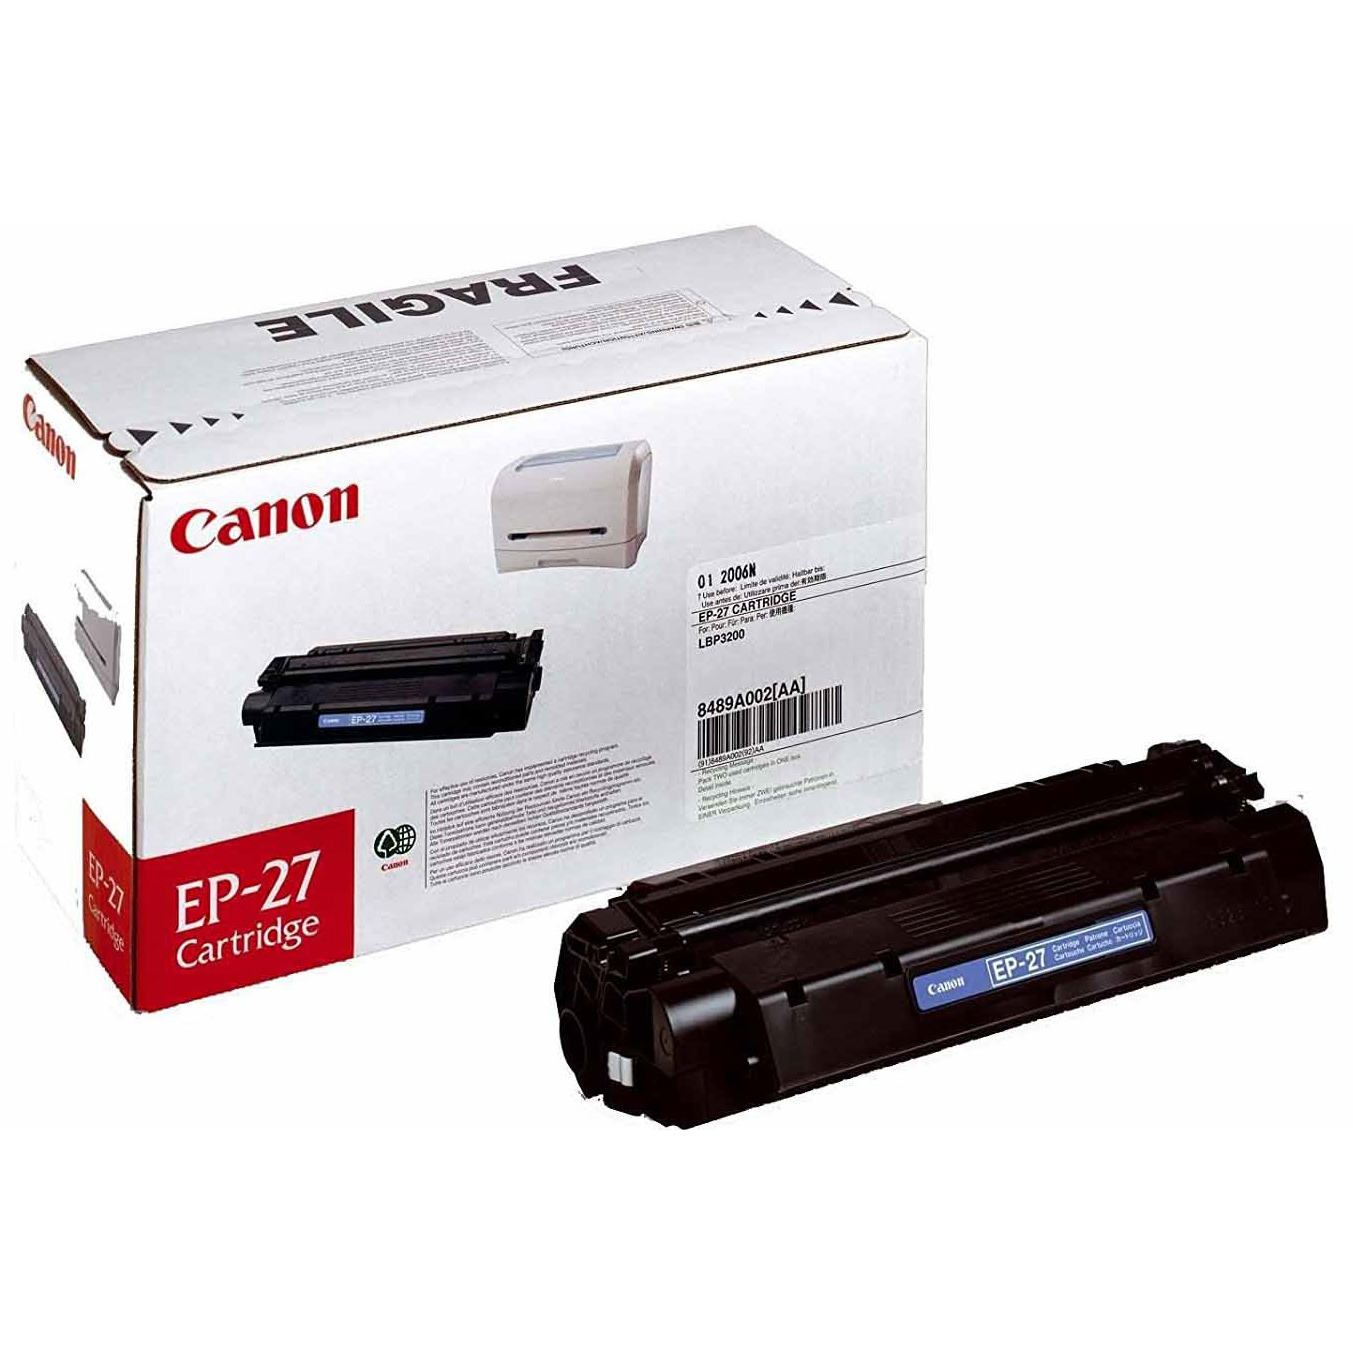 Original Canon EP-27 Black Toner Cartridge (8489A002AA)